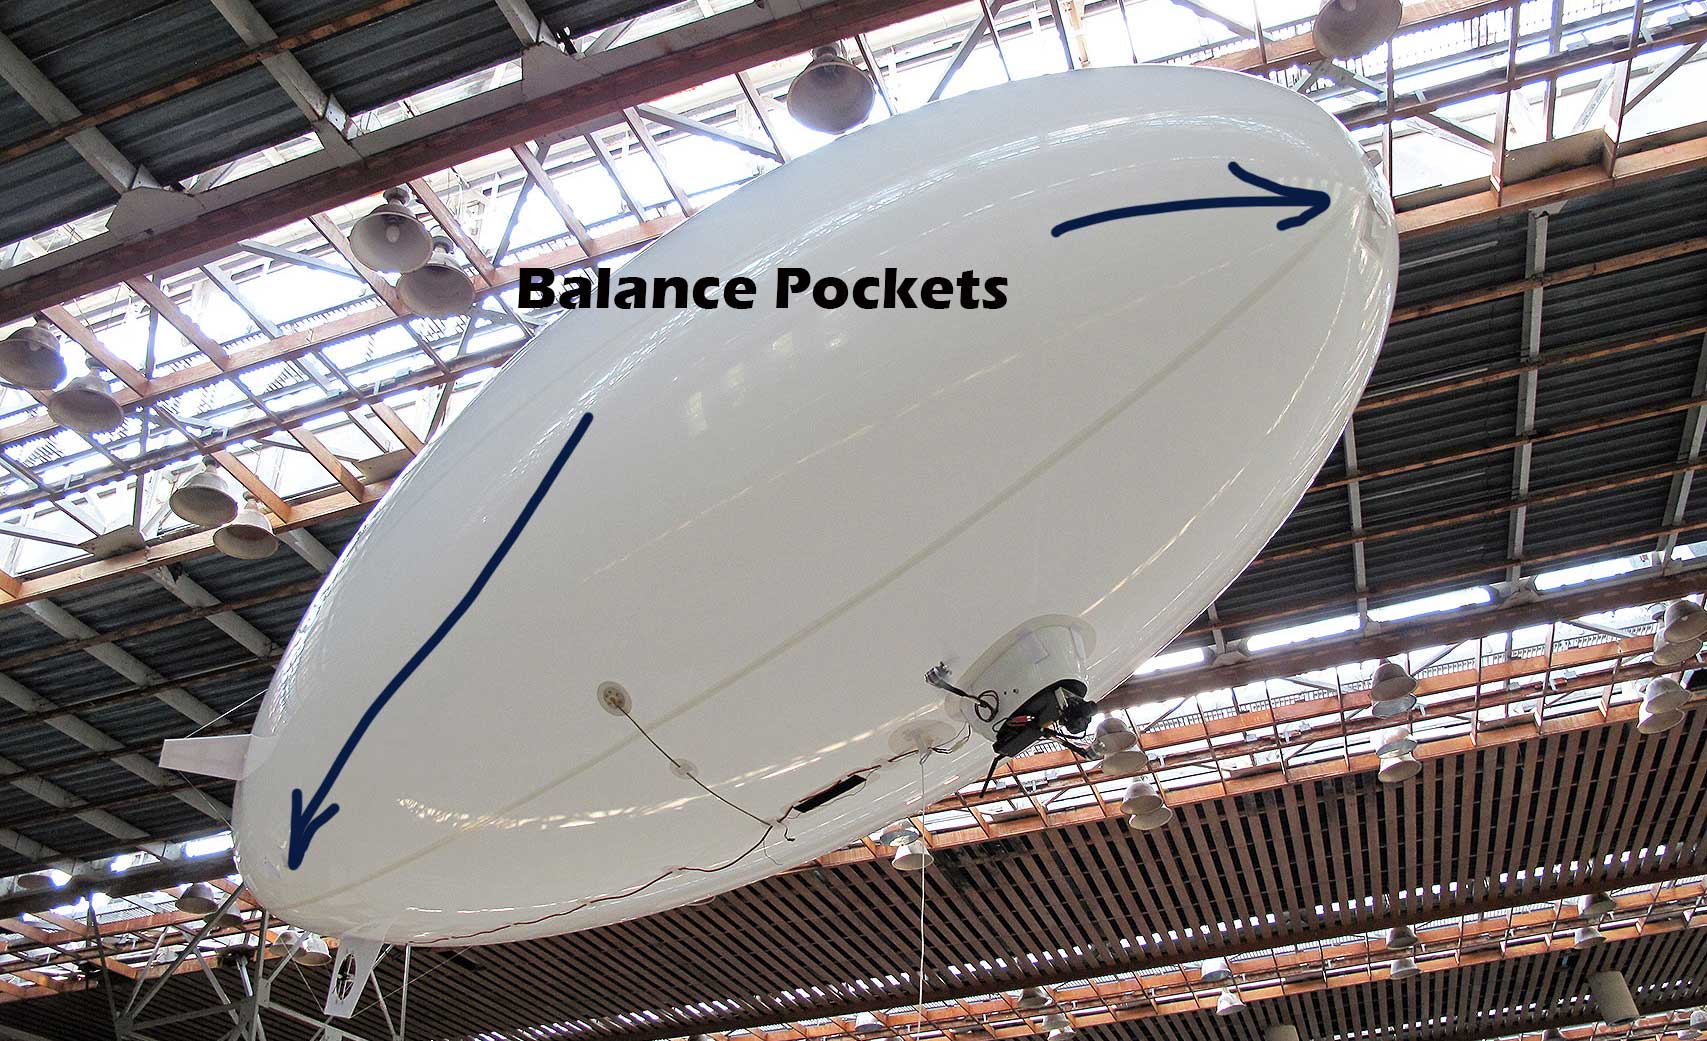 Balance-pockets-on-indoor-Blimps